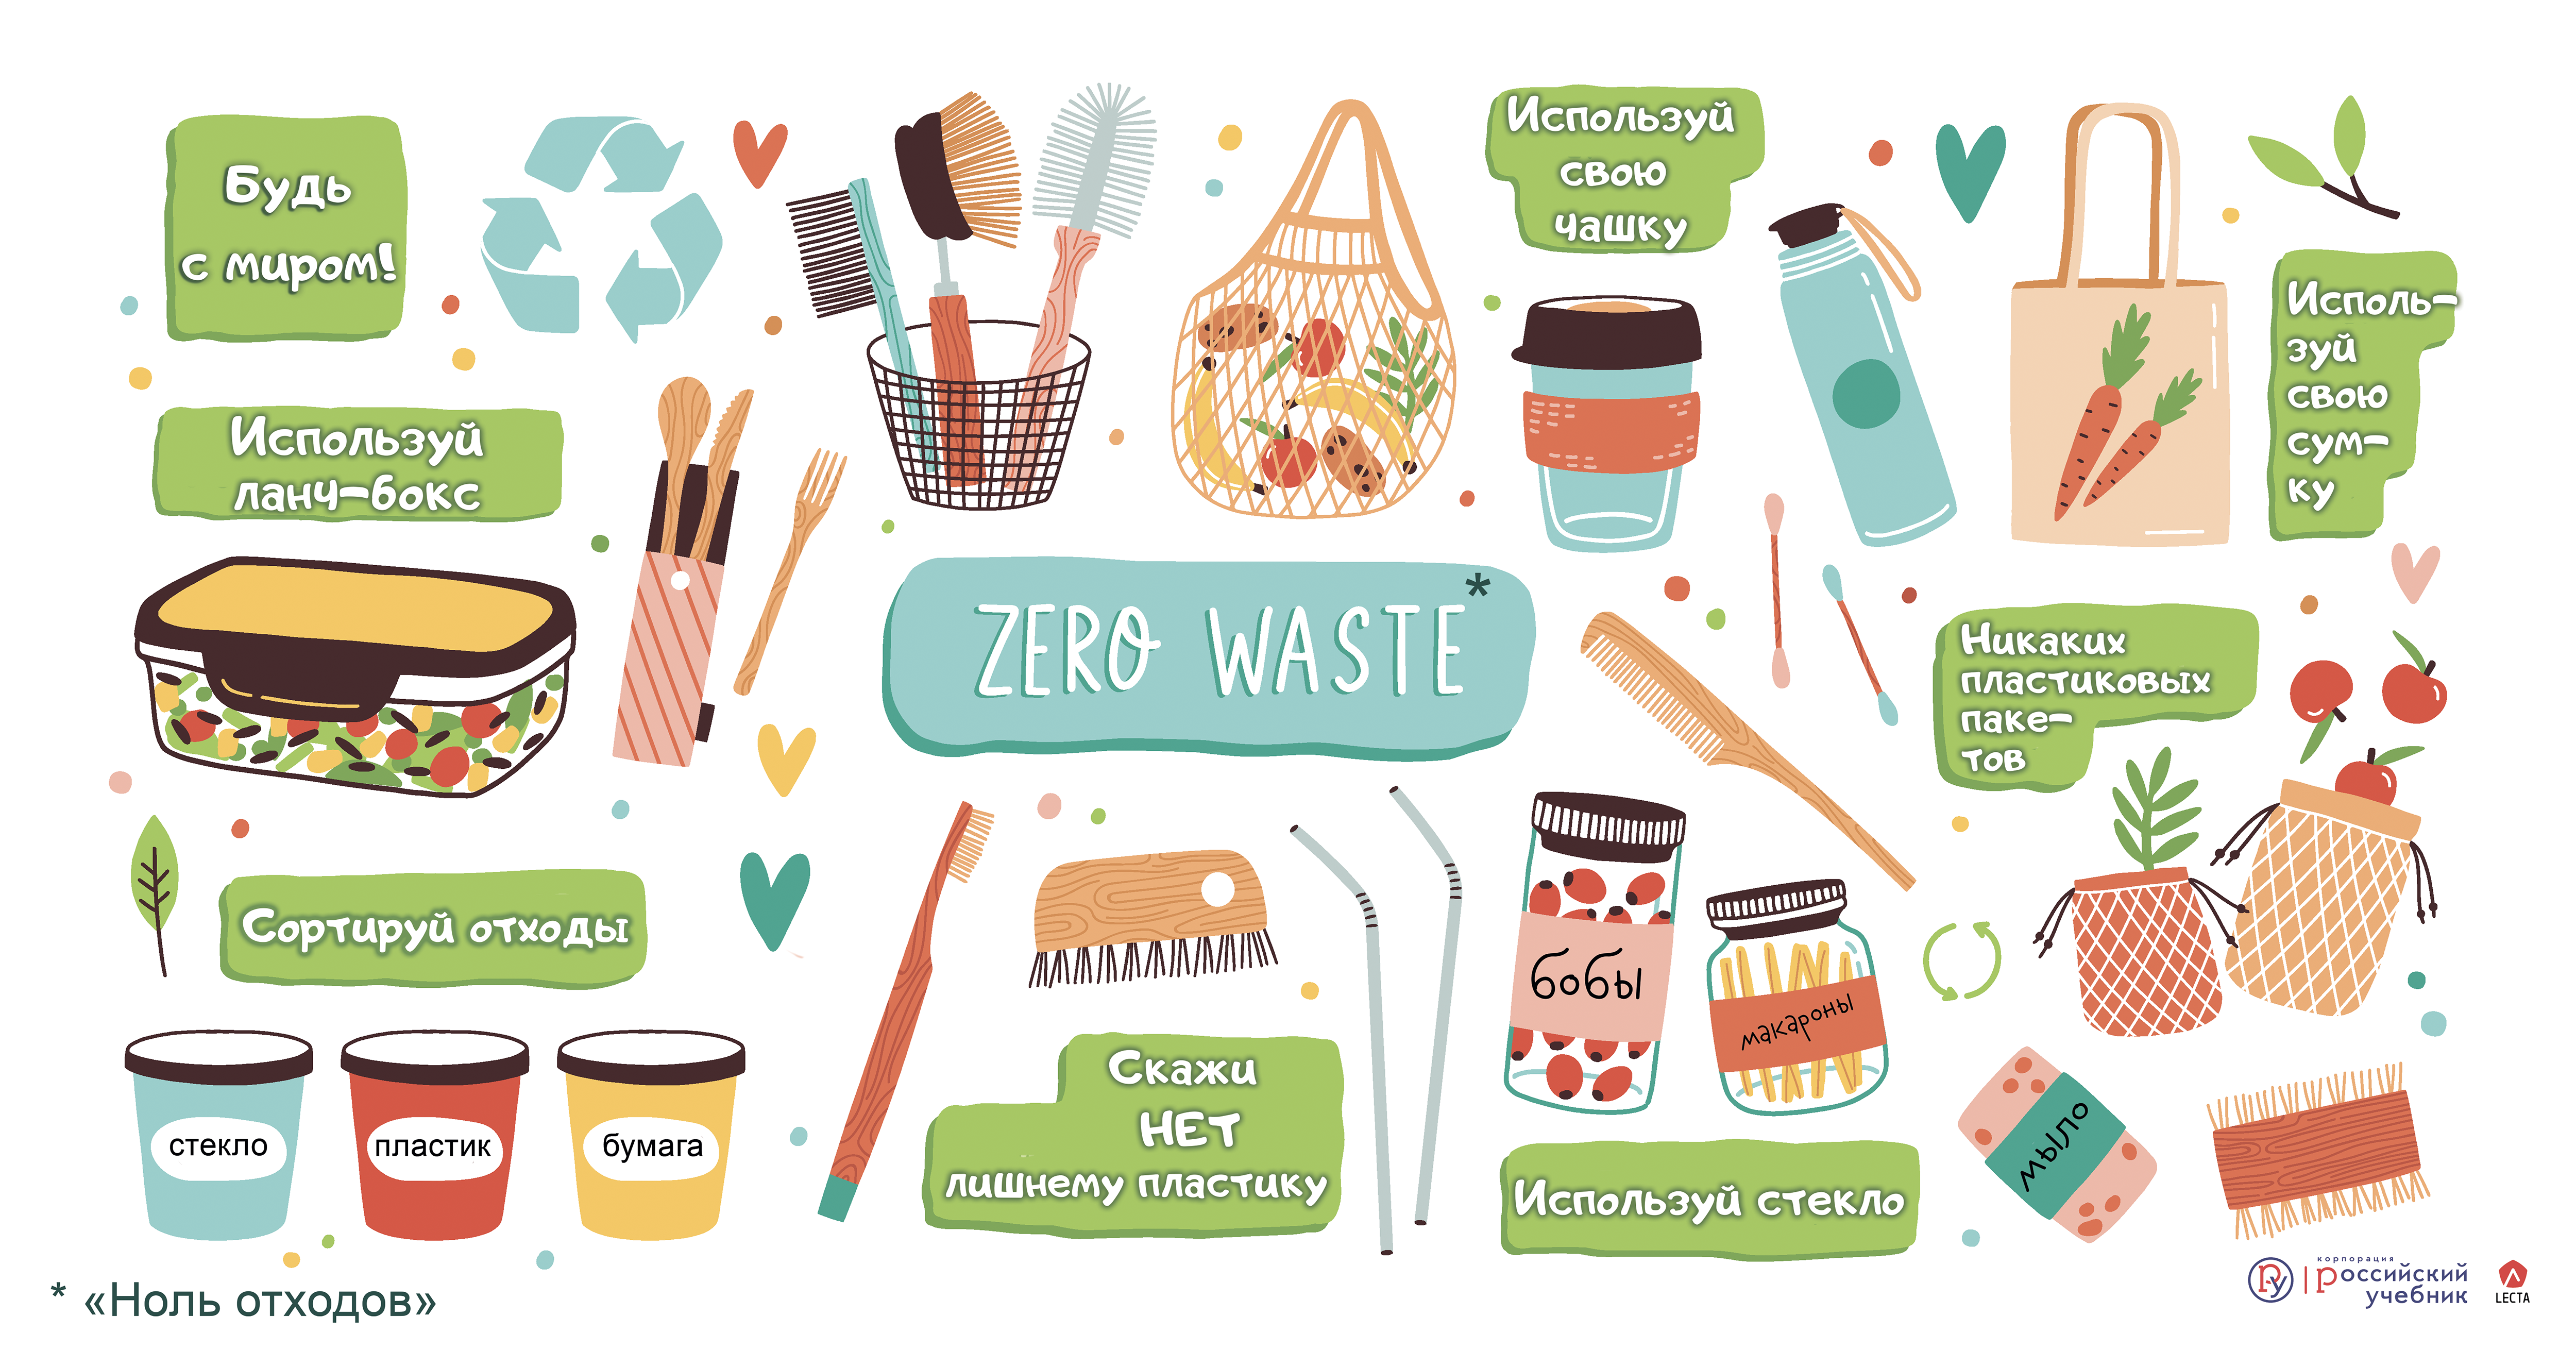 Zero waste – ноль отходов